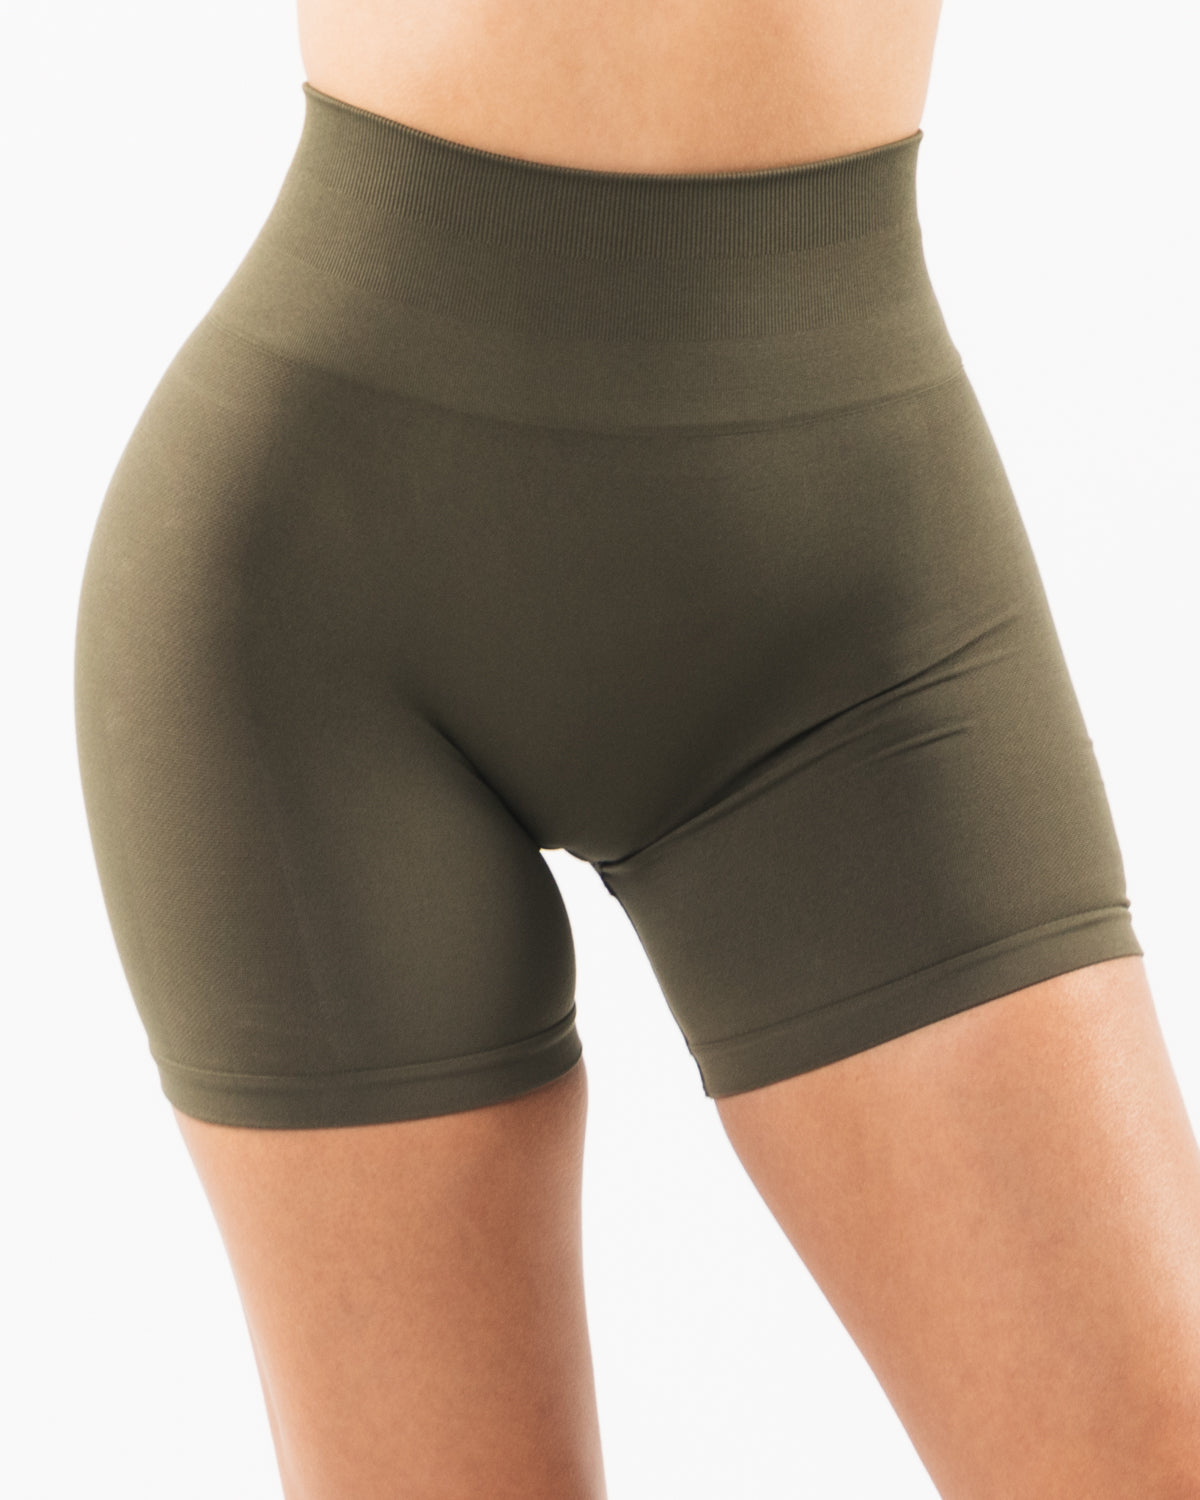 Alphalete Amplify Shorts ( CHOCOLATE ) Size XS Brand New. 100% Authentic!